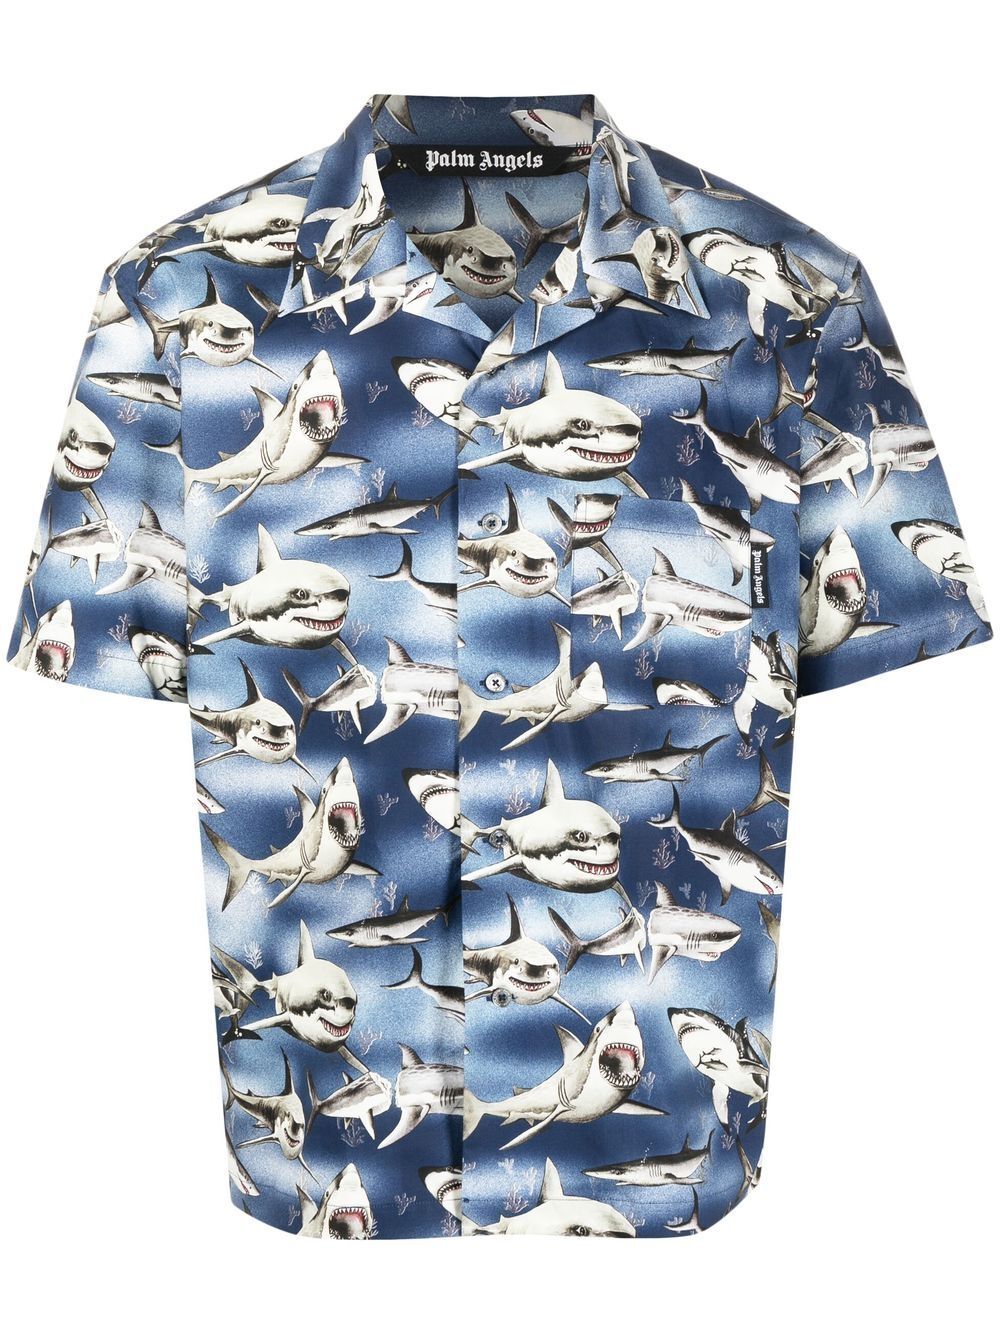 Sharks bowling shirt